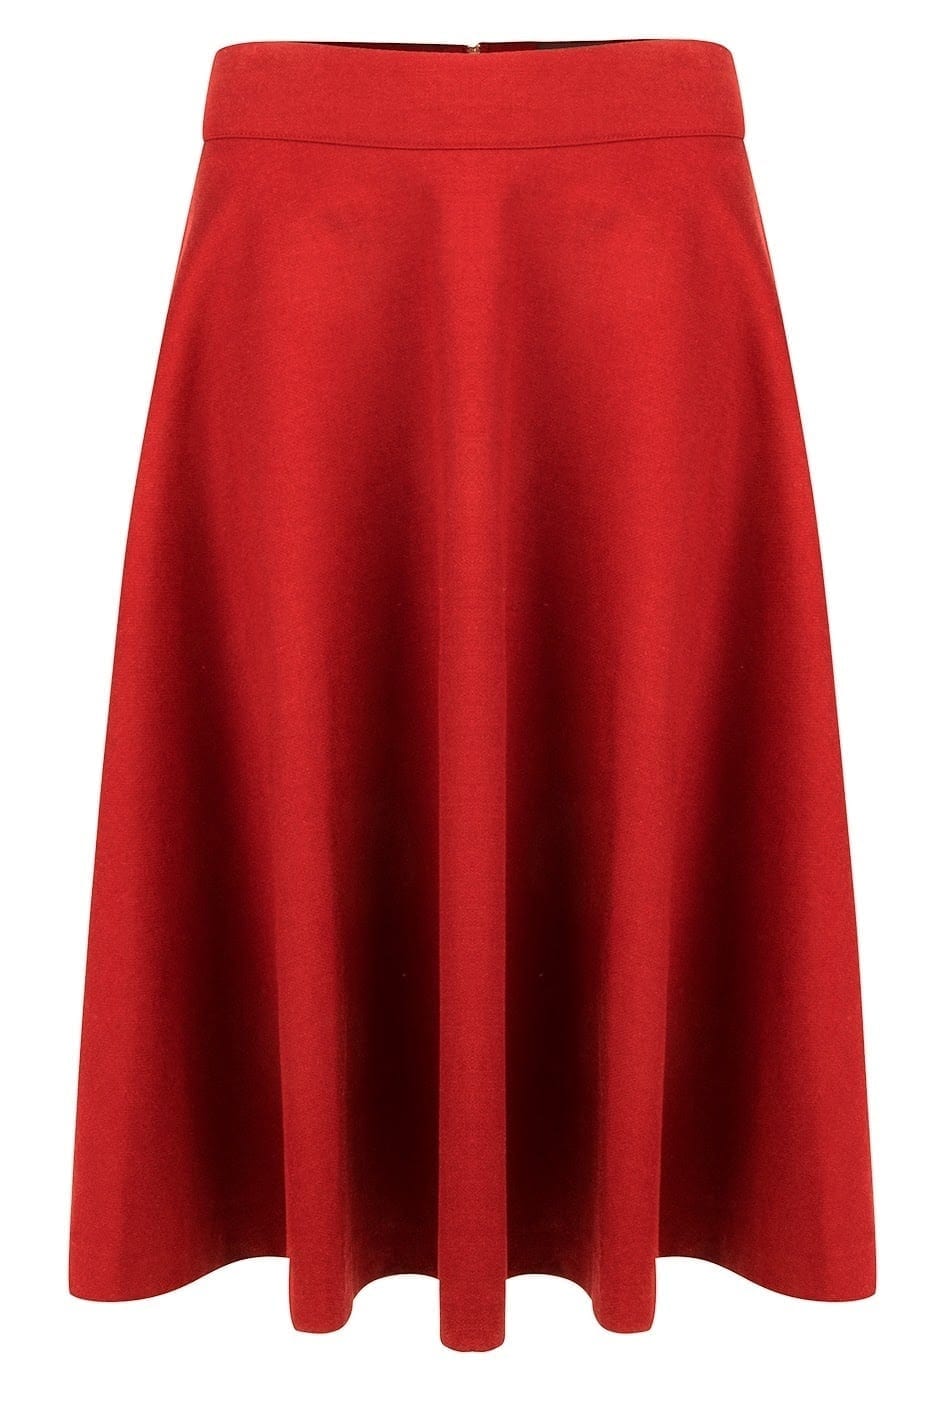 Long Circle Skirt XL Red - Vintagekledingwinkel.nl